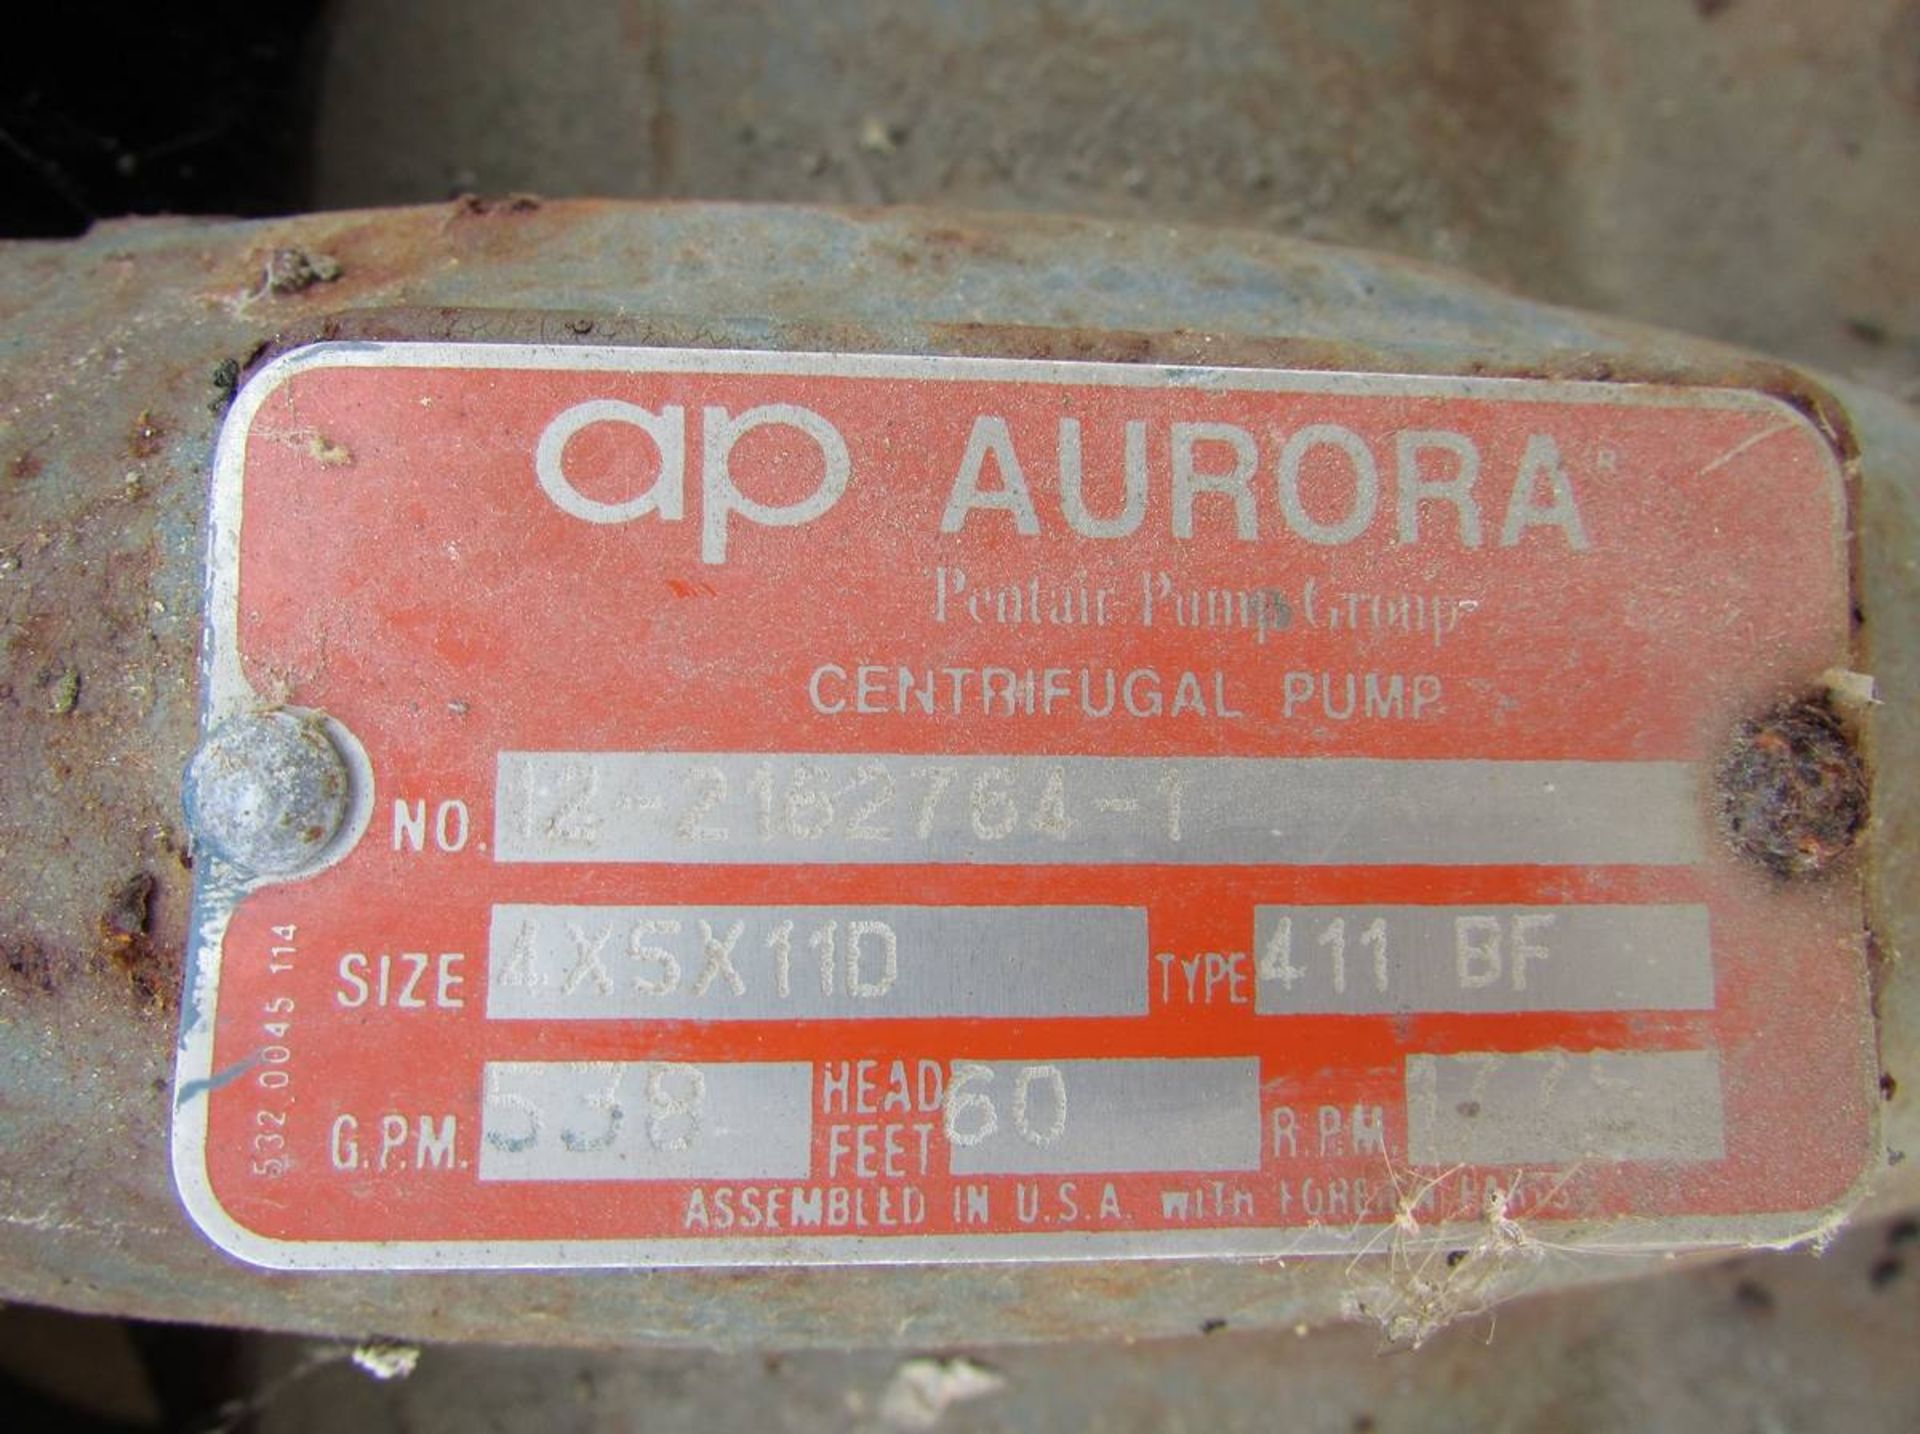 Aurora Pentair Pump Group 411 BF 15HP Centrifugal Pump Skid - Image 8 of 8